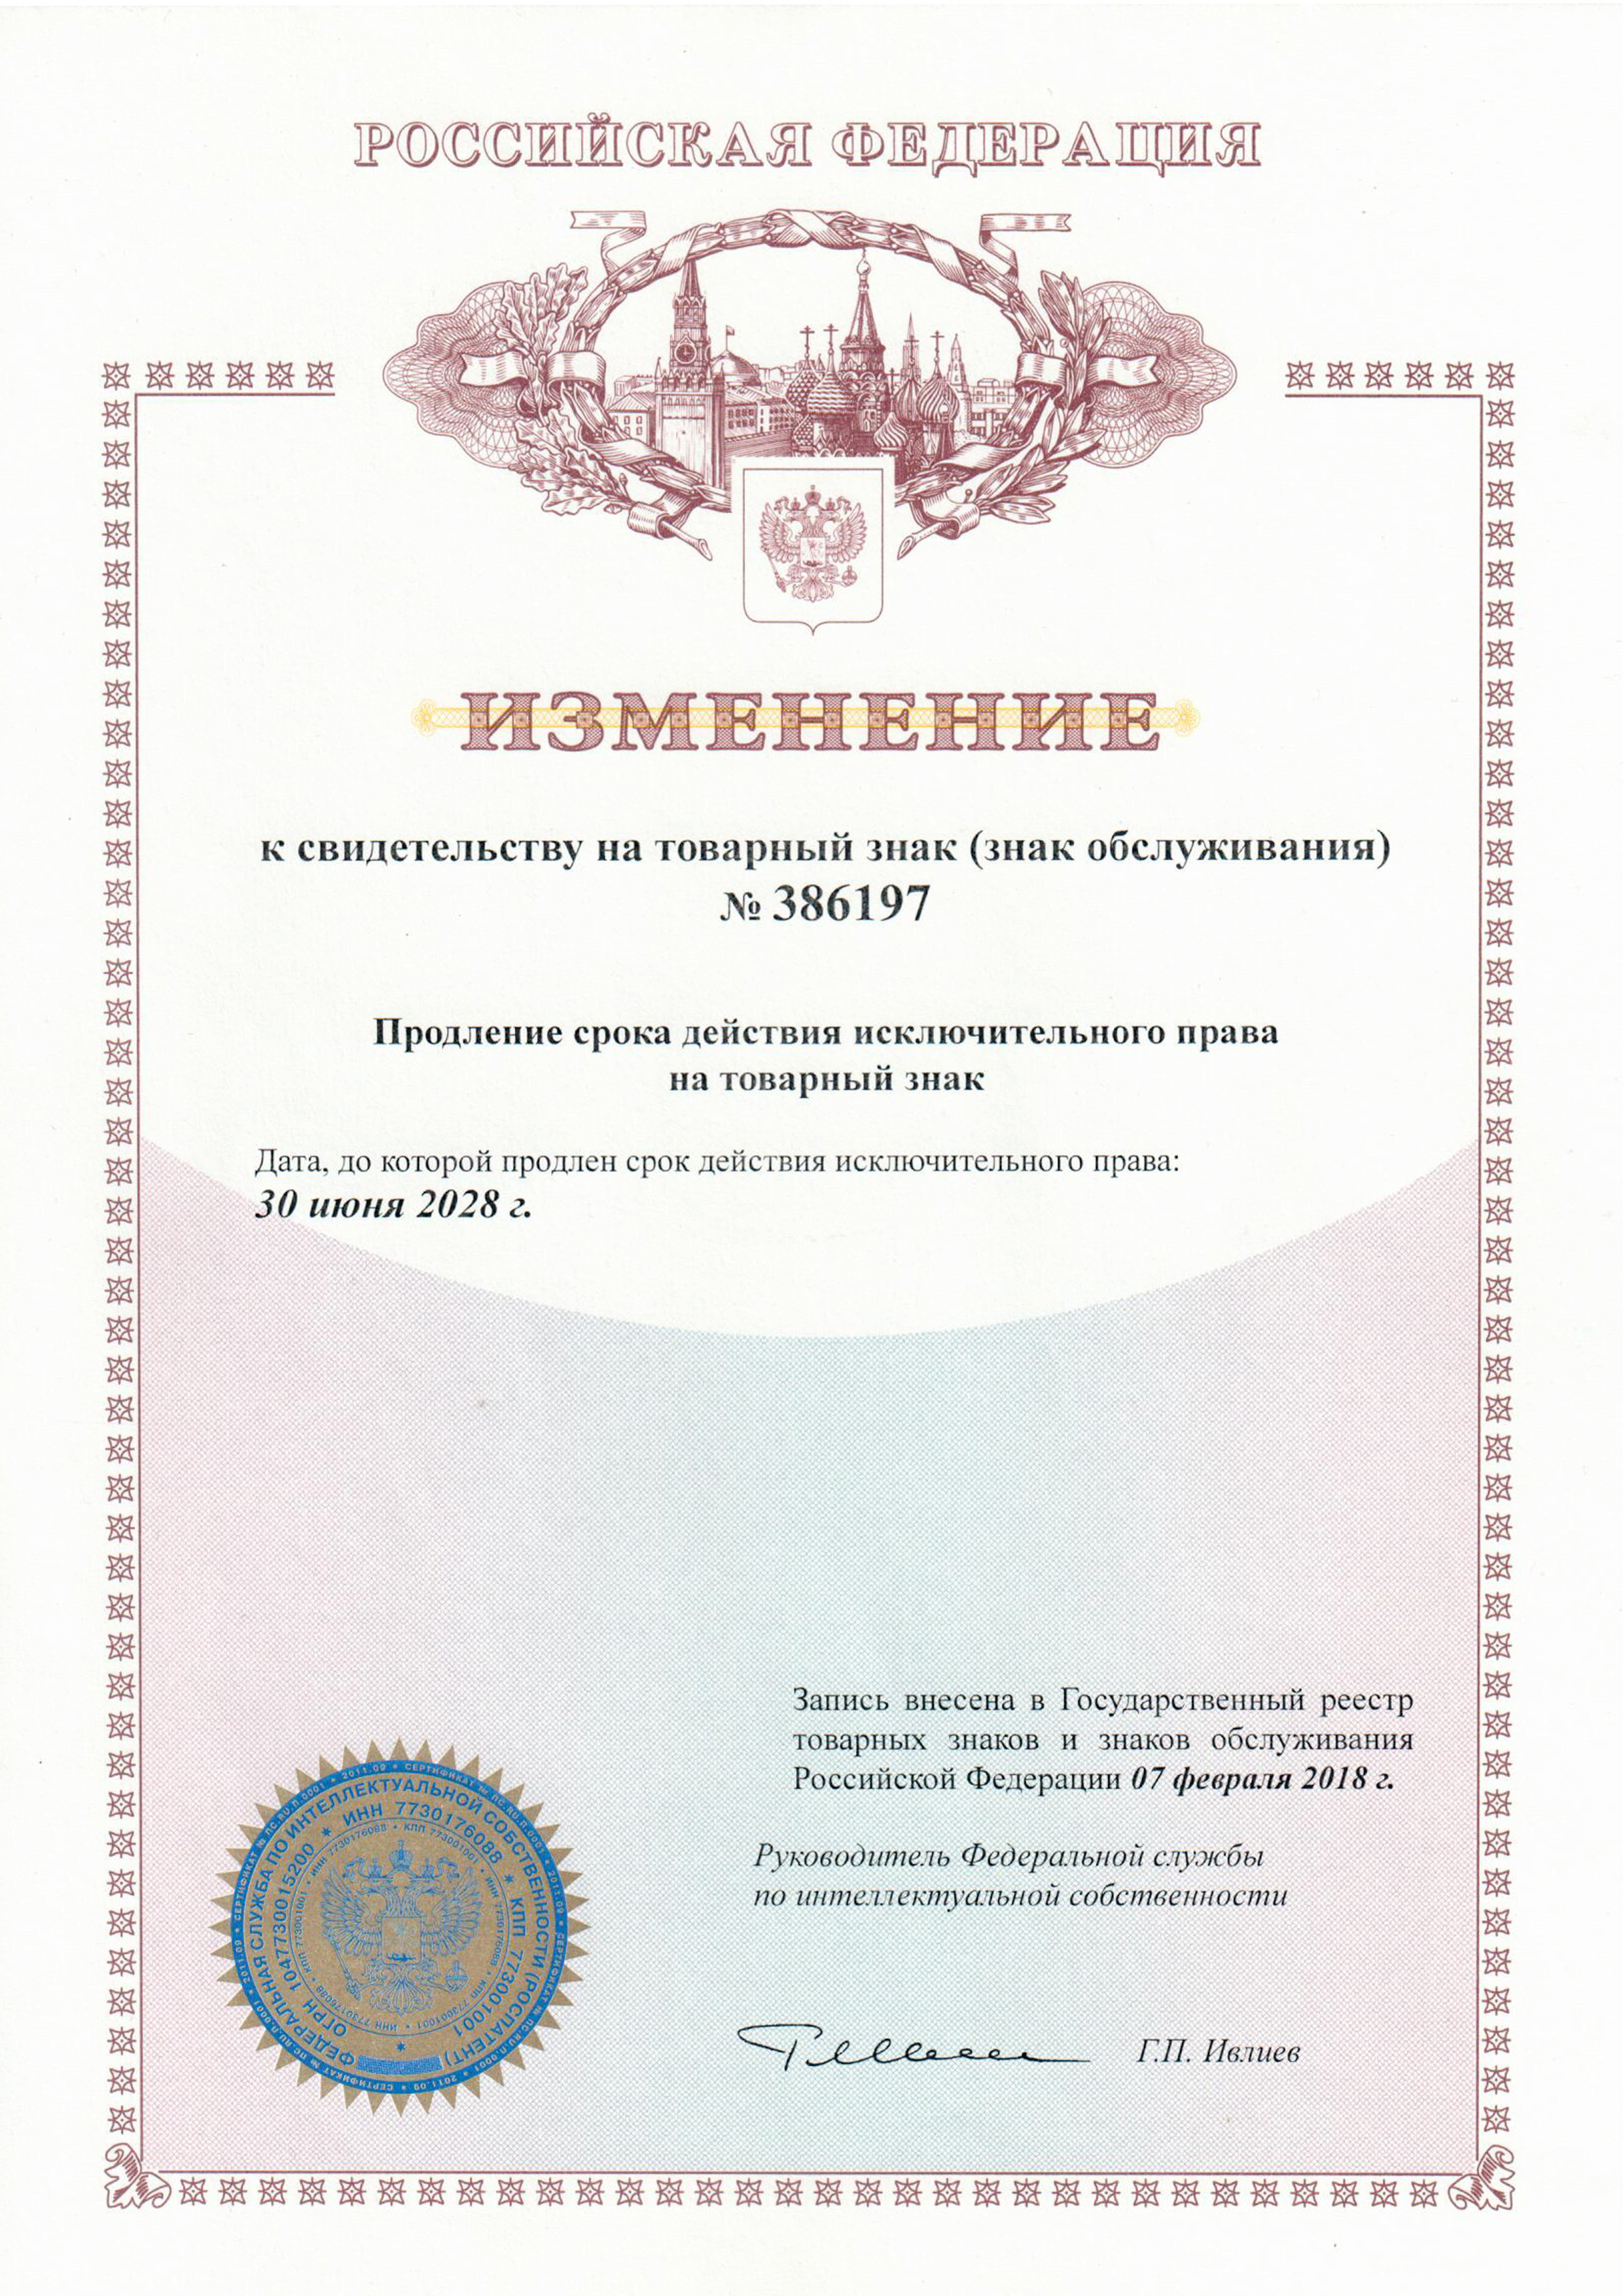 Свидетельство о регистрации товарного знака Thermo TVK на территории РФ